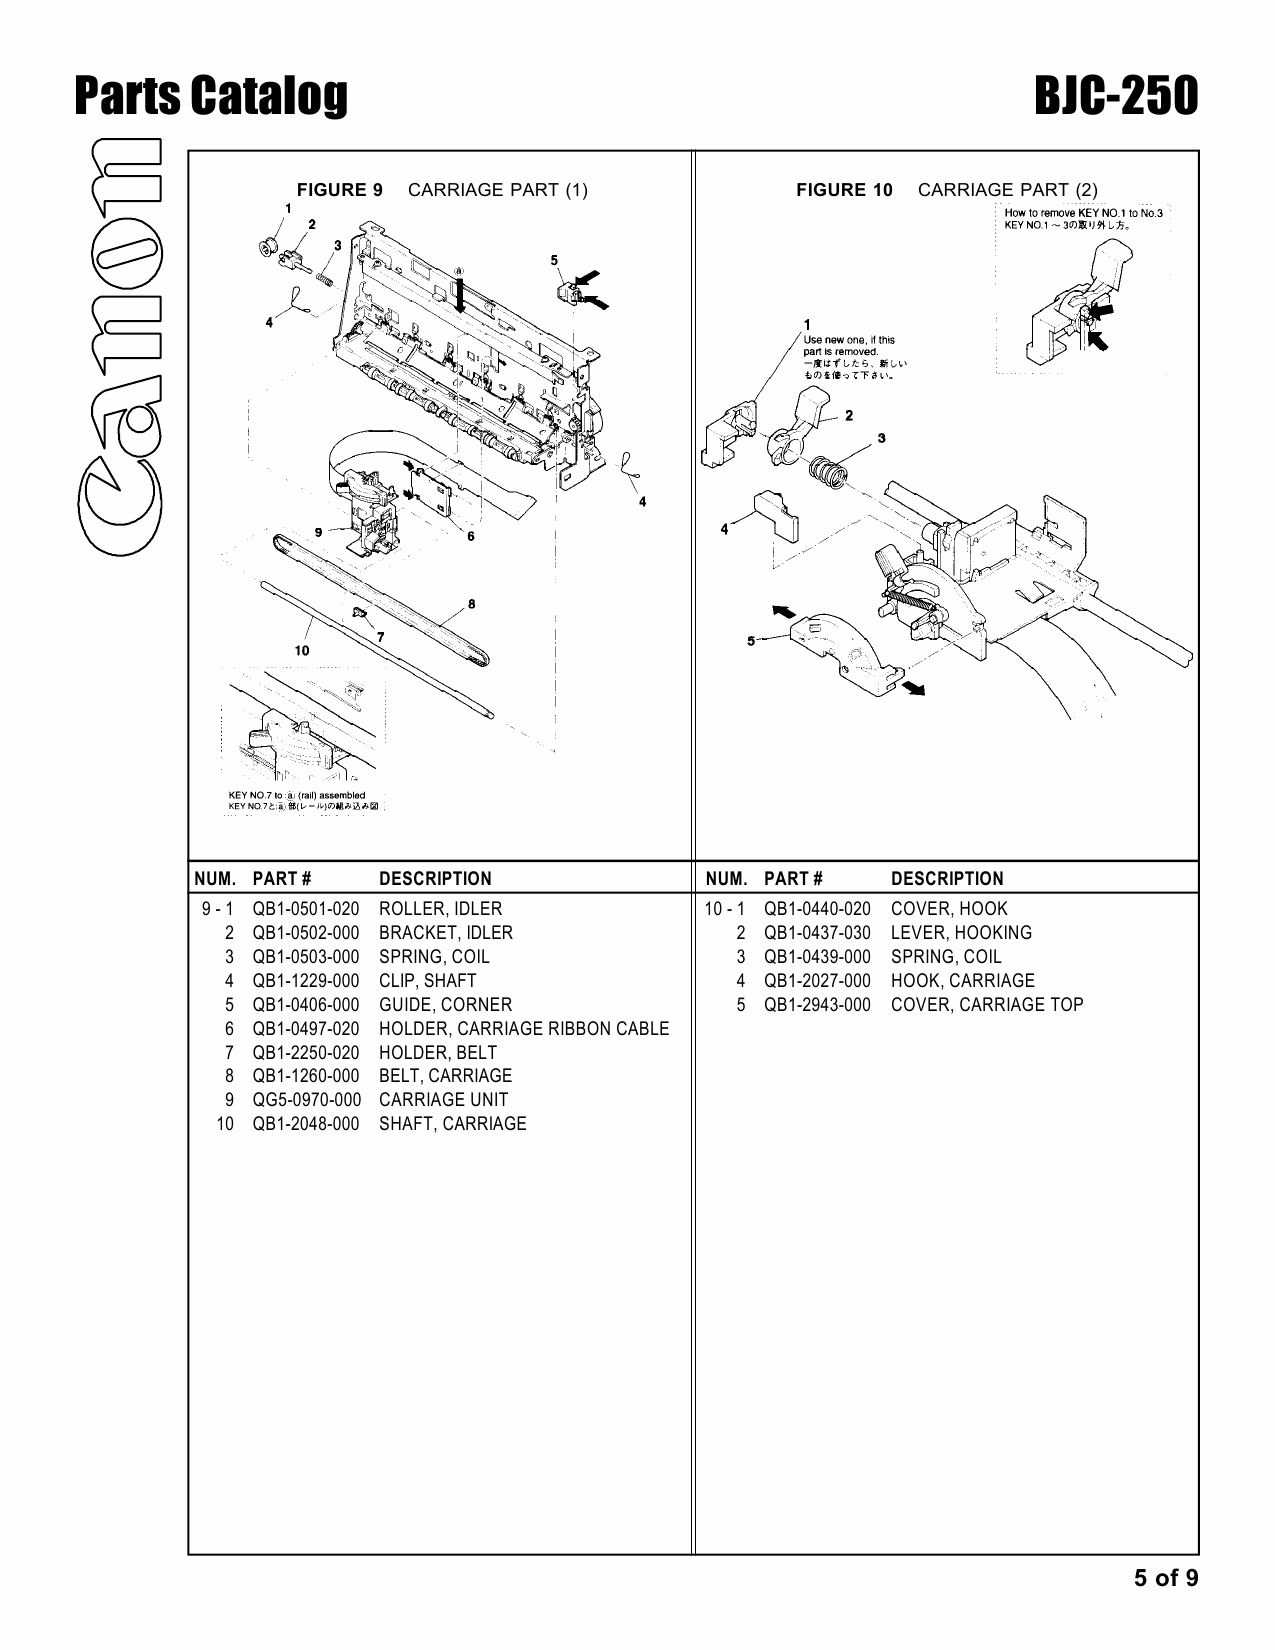 Canon BubbleJet BJC-250 Parts Catalog Manual-5